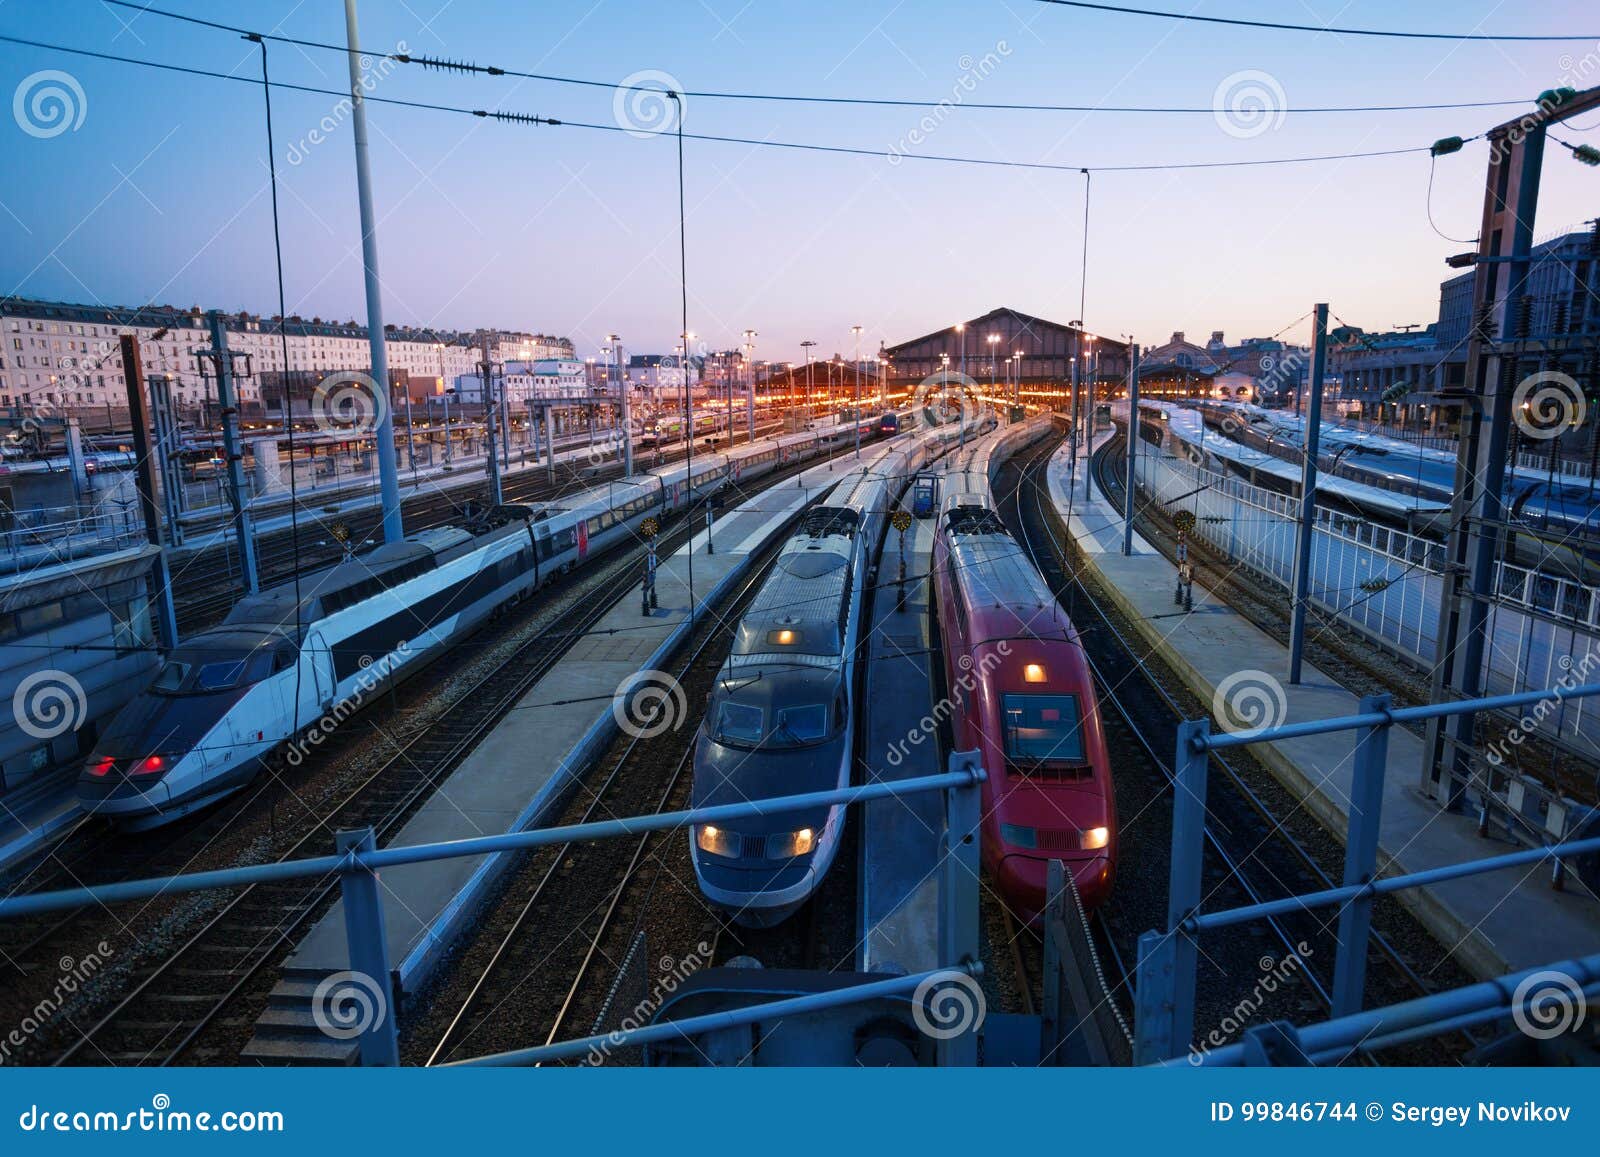 high-speed trains at gare du nord station, paris